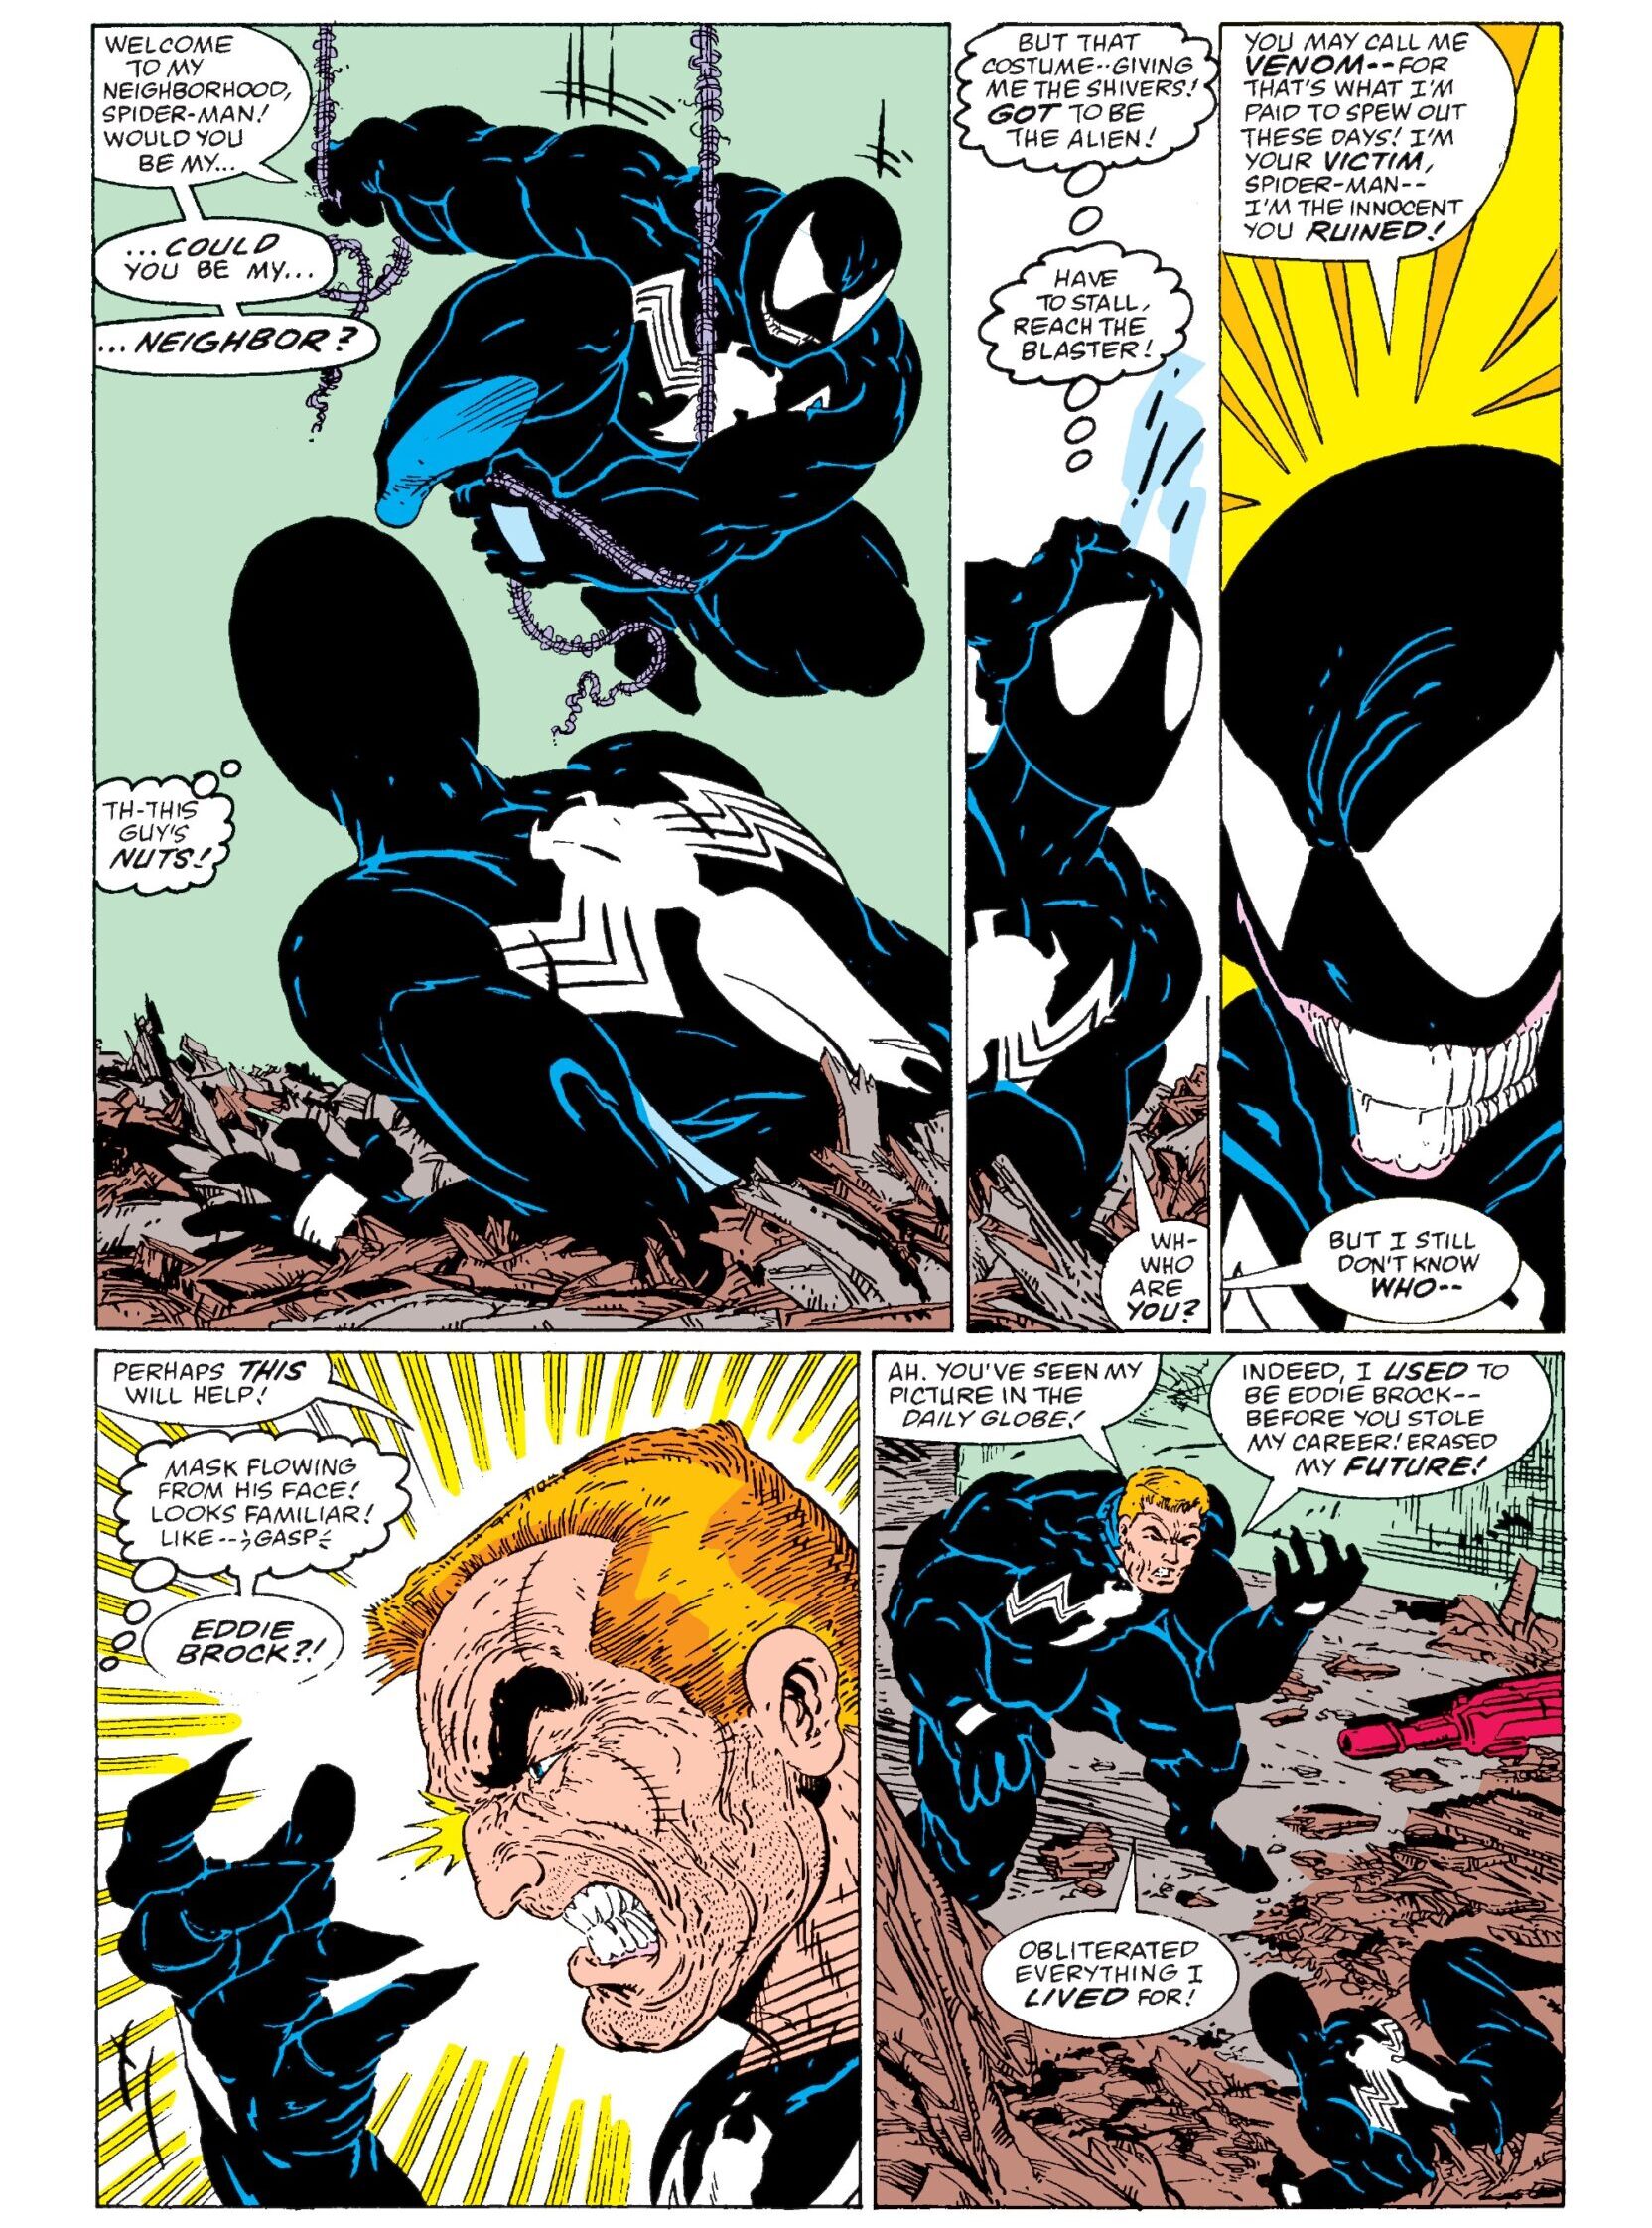 Venom reveals himself in Amazing Spider-Man Vol. 1 #300 "Venom" (1988), Marvel Comics. Words by David Michelinie, art by Todd McFarlane, Bob McLeod, Bob Sharen, and Rick Parker.